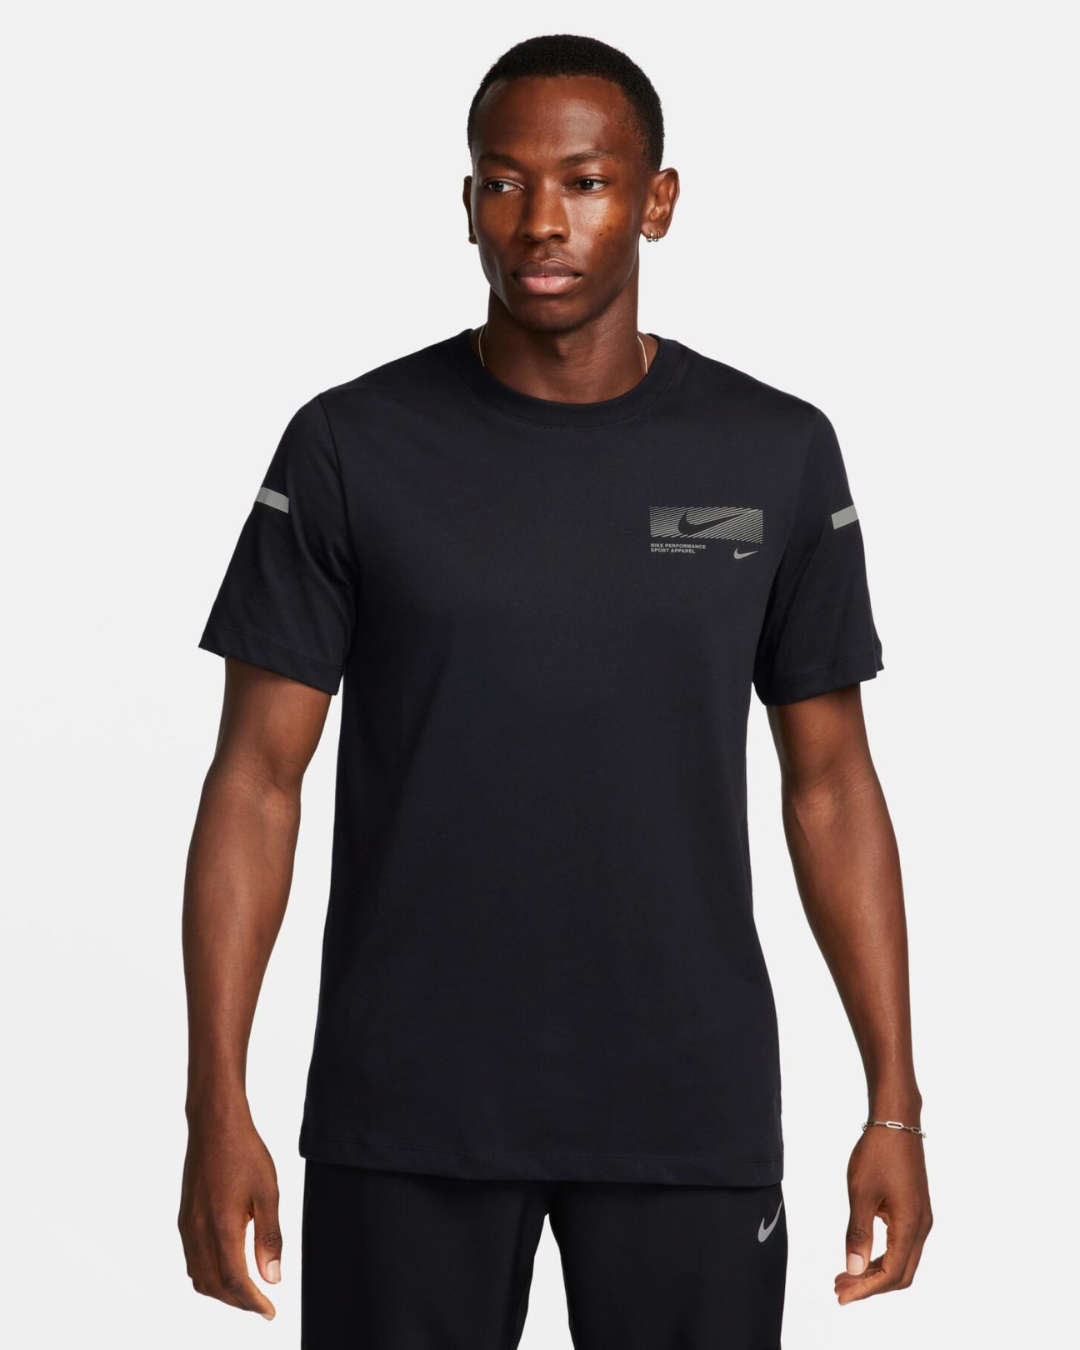 Nike Dri-FIT T-shirt - Black